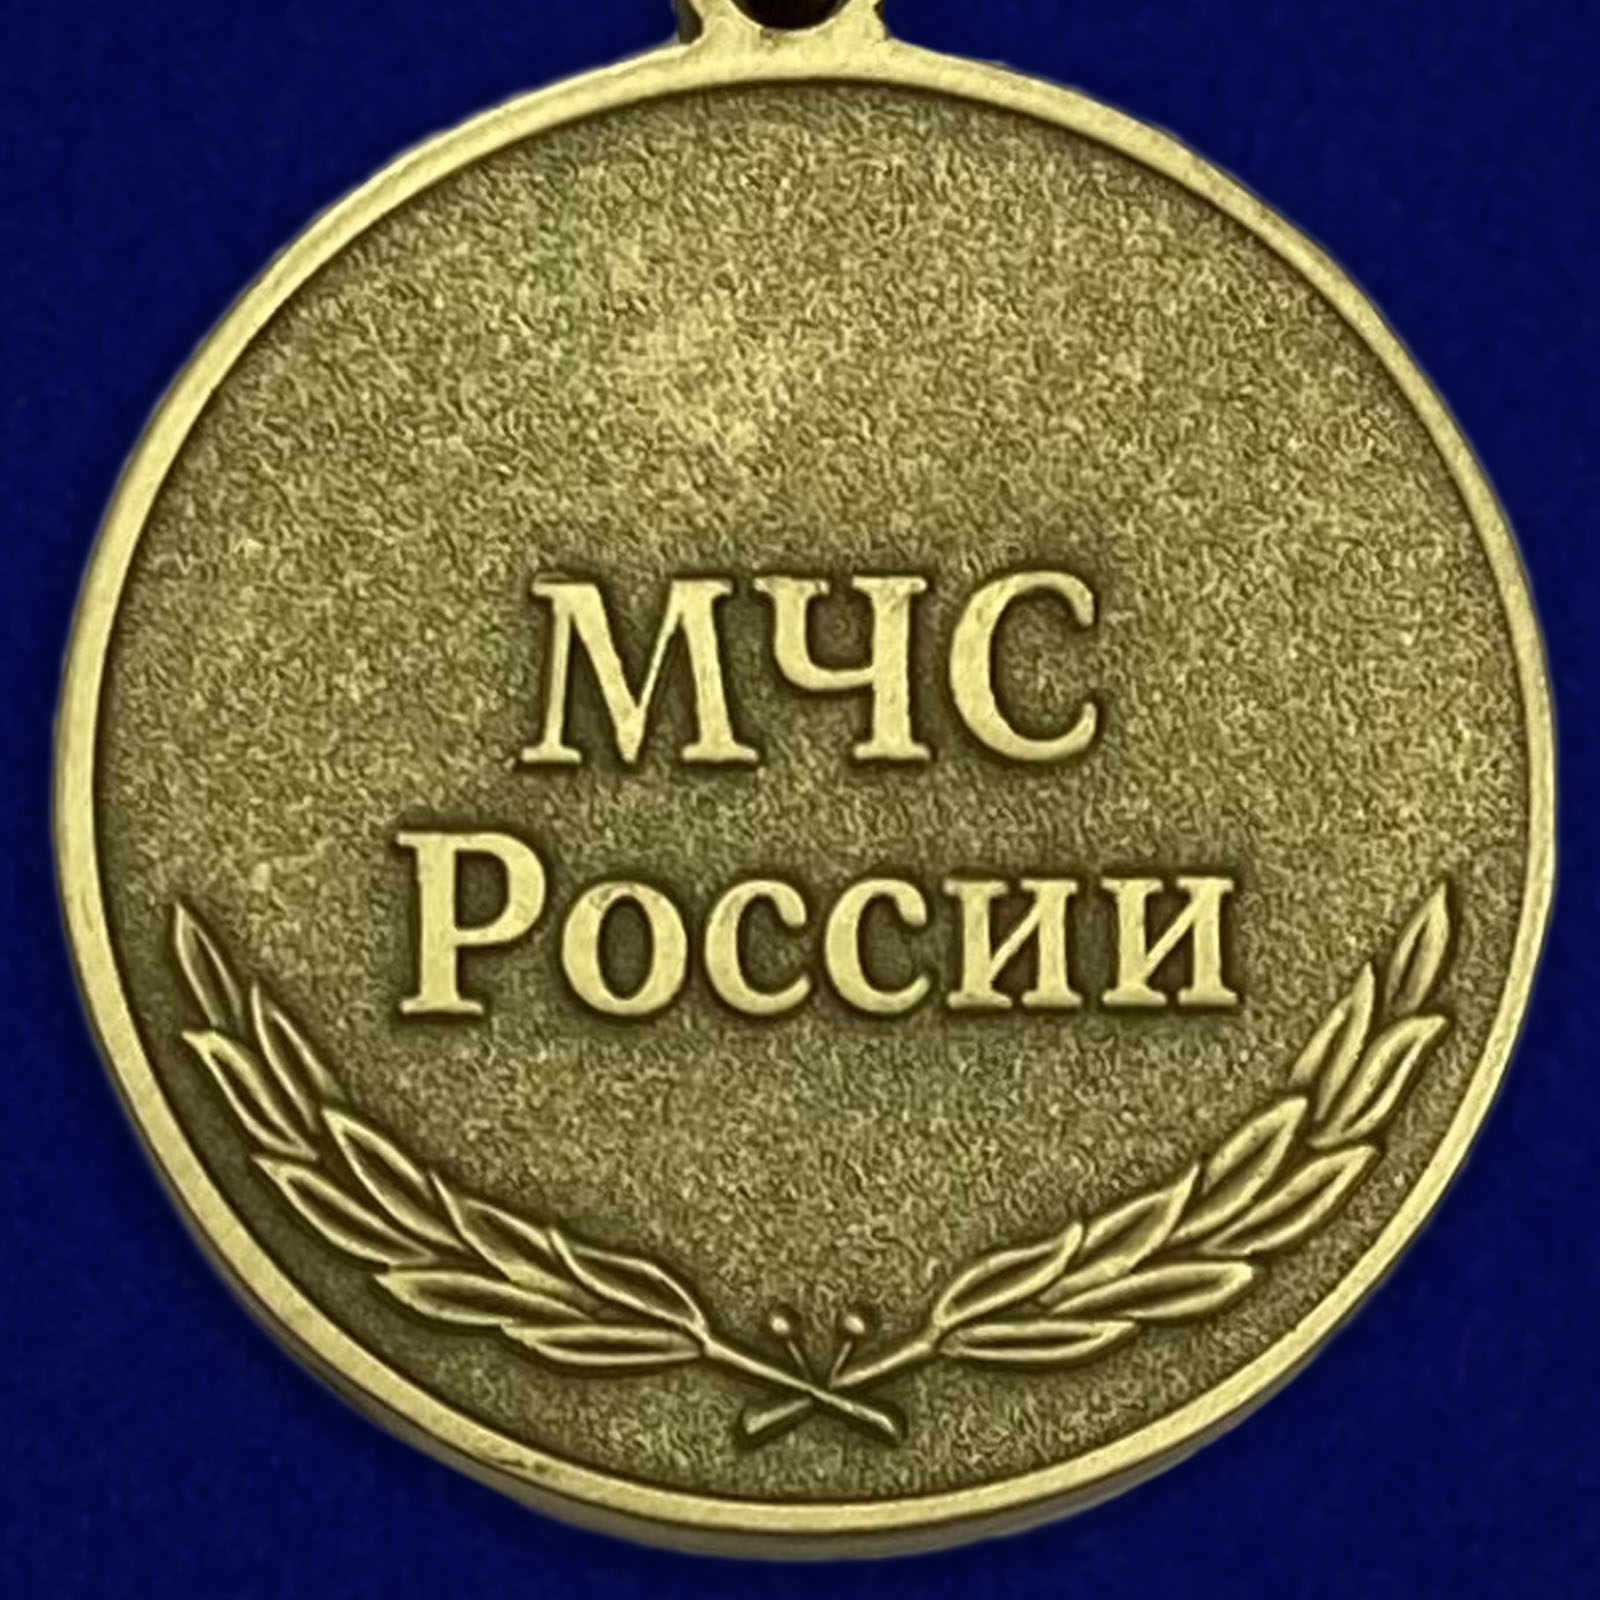 Реверс медали "За усердие" МЧС России